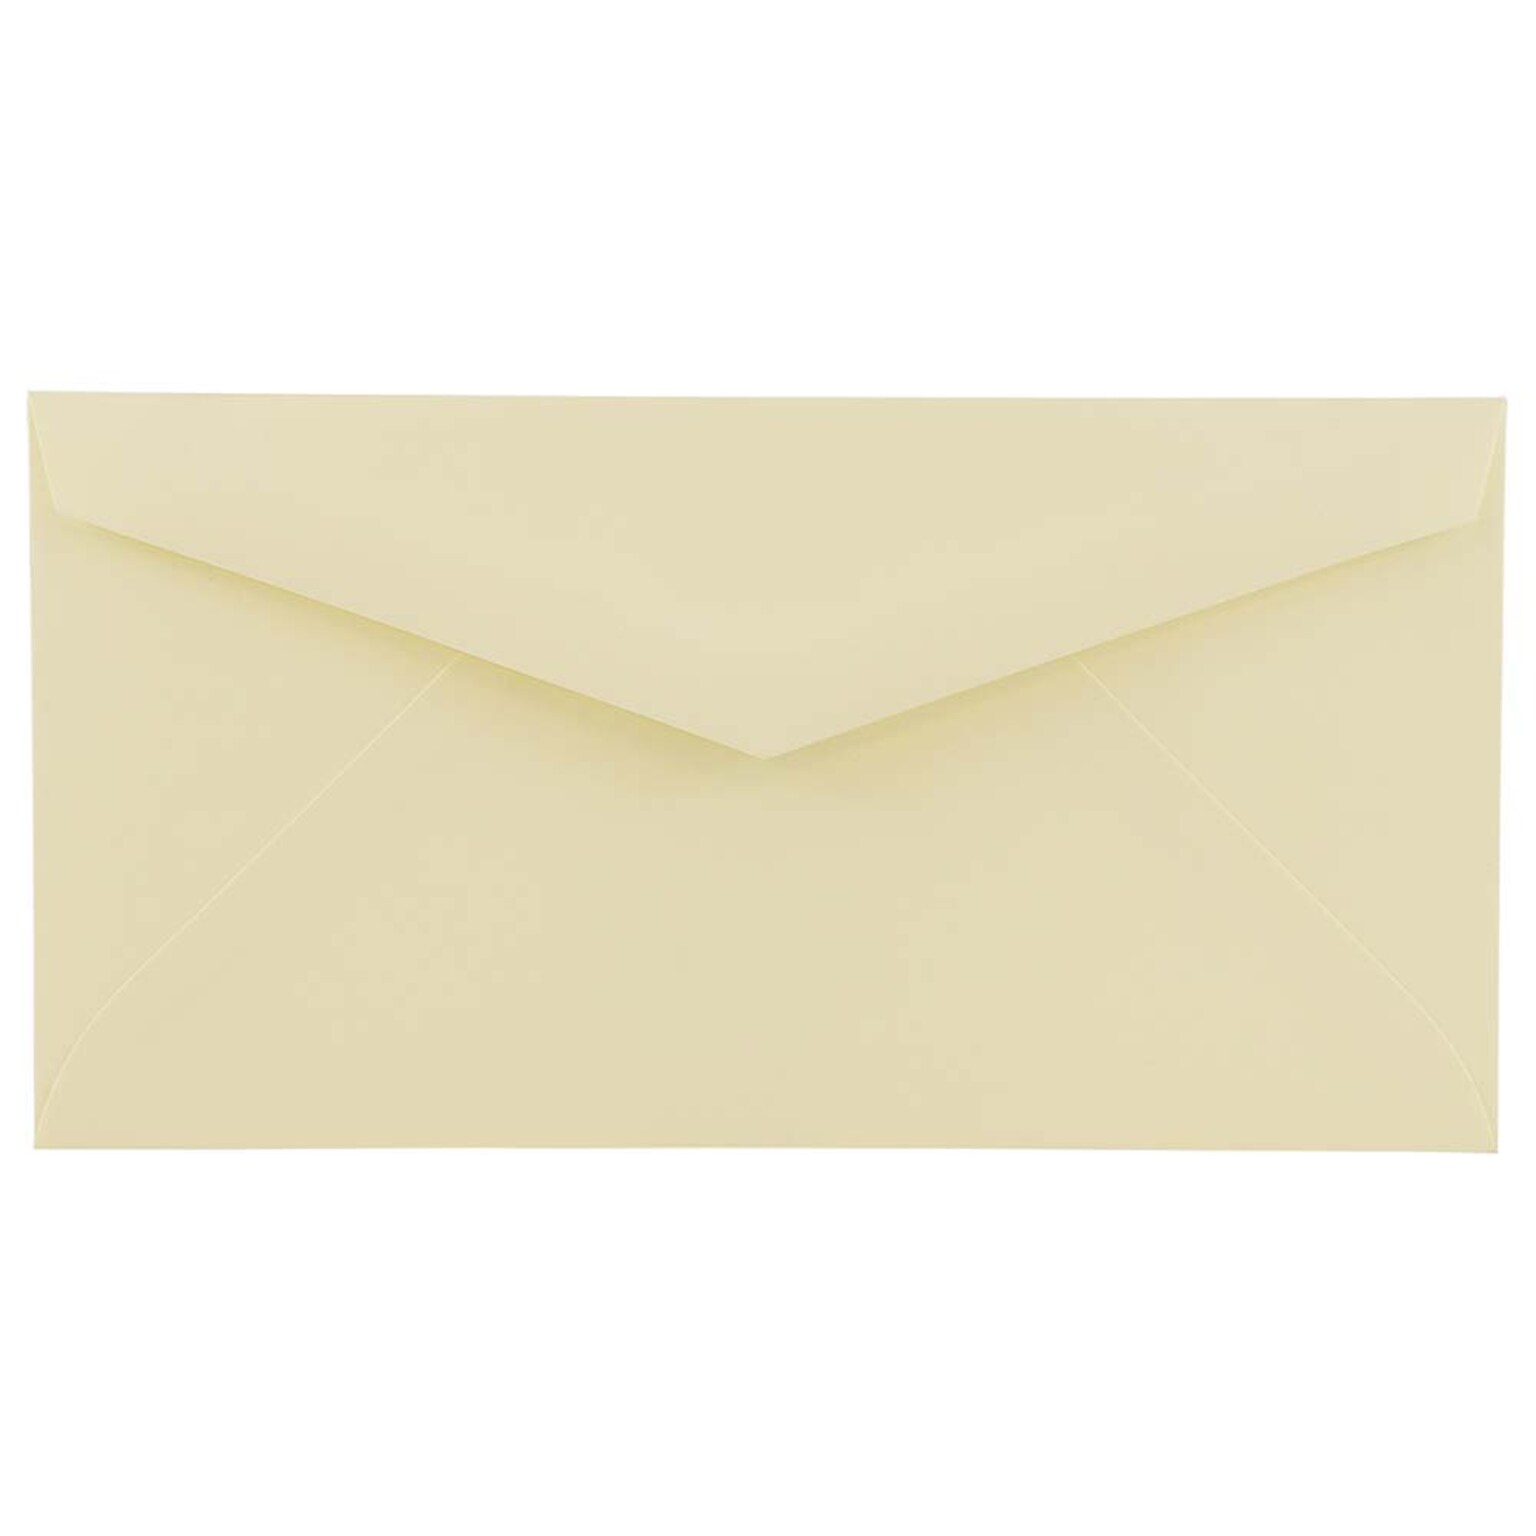 JAM Paper Monarch Envelopes, 4.5 x 8.125, Ivory, 25/Pack (4093016)